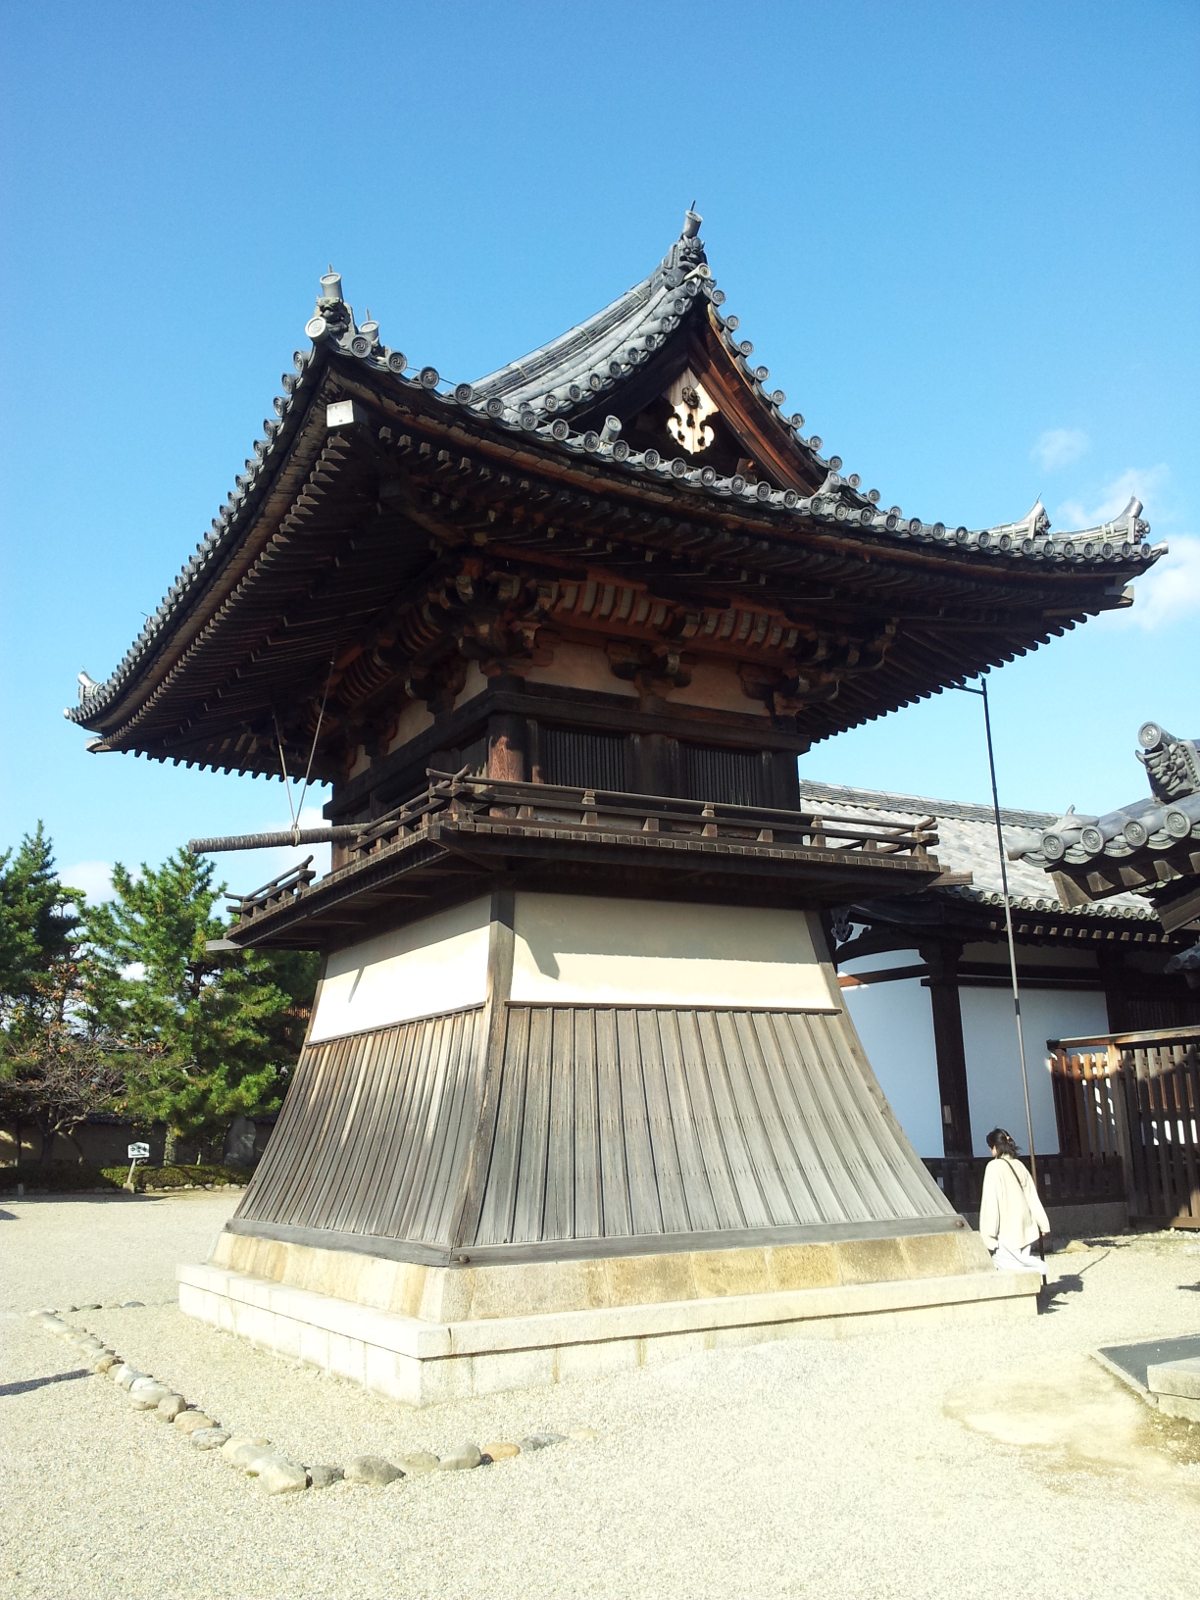 Toin Shoro at Horyuji in daylight